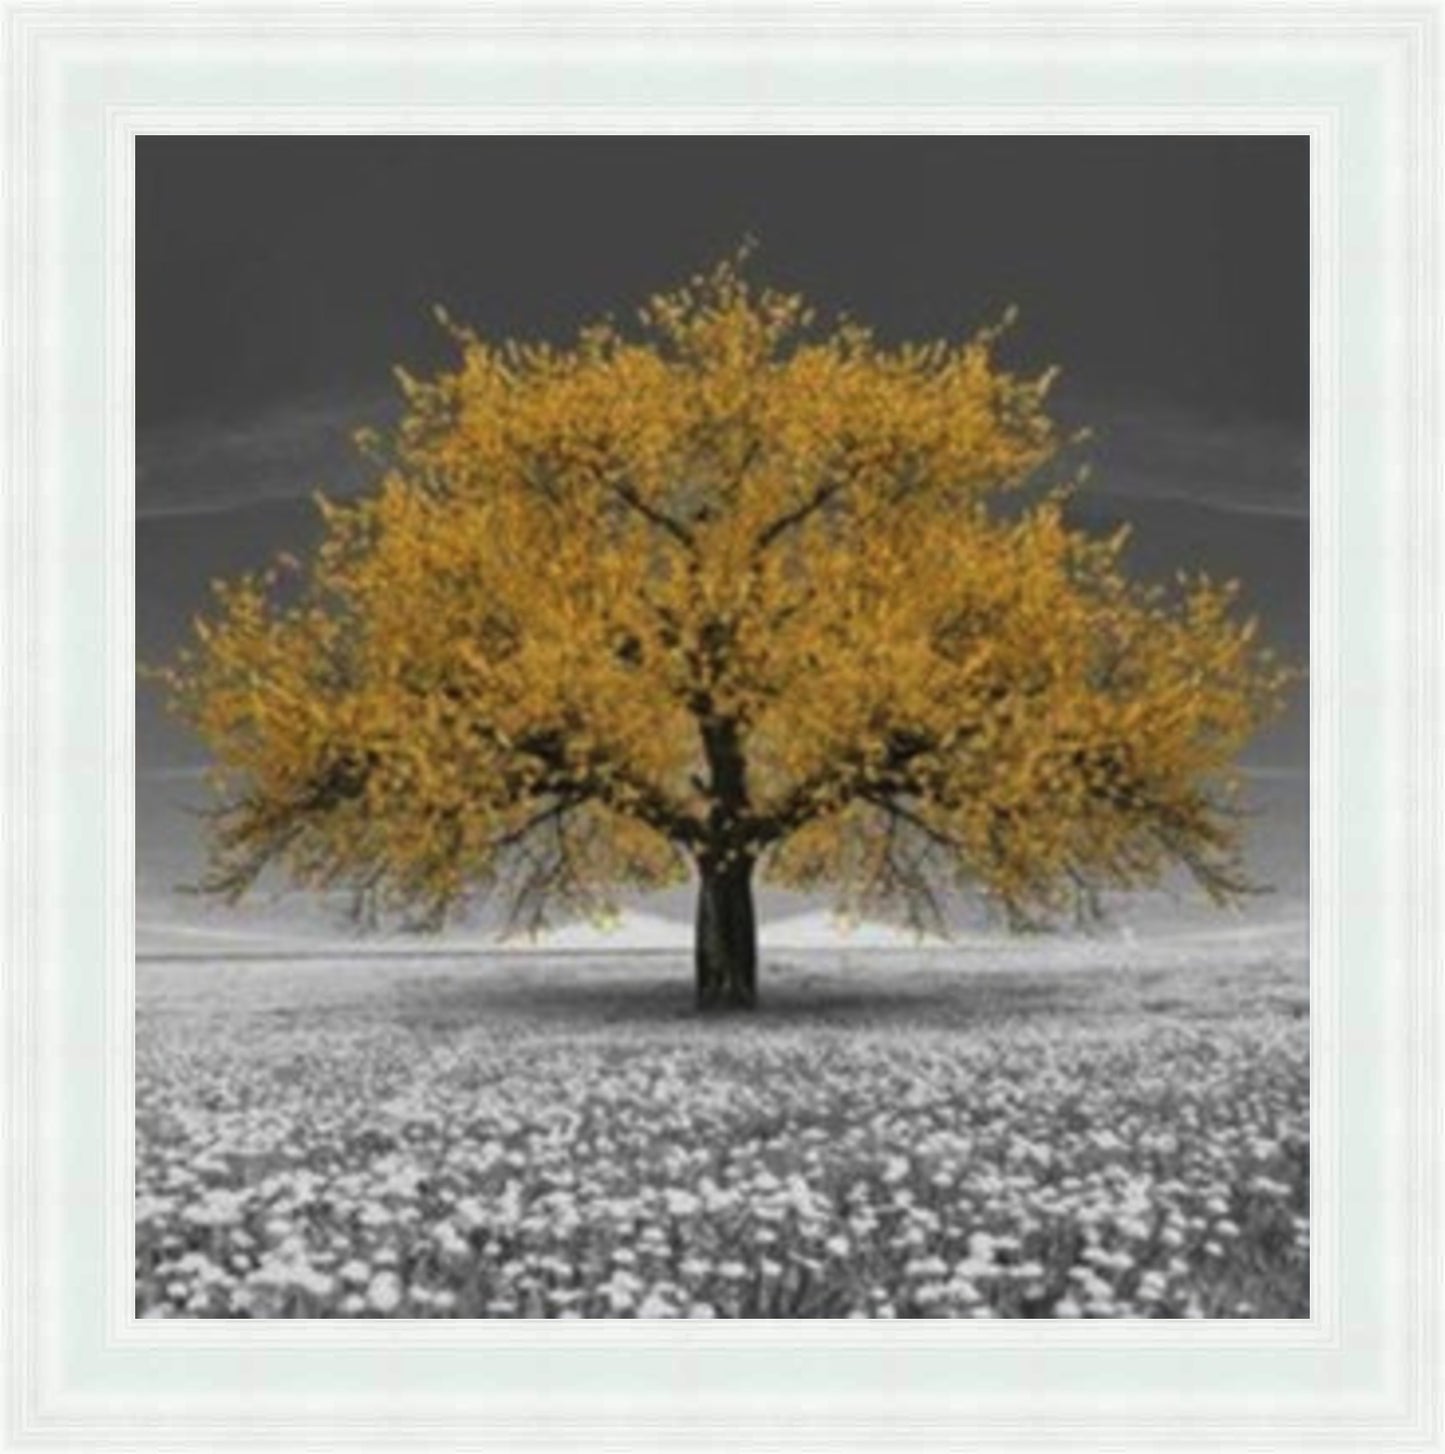 Gold Cherry Blossom Tree - Slim Frame